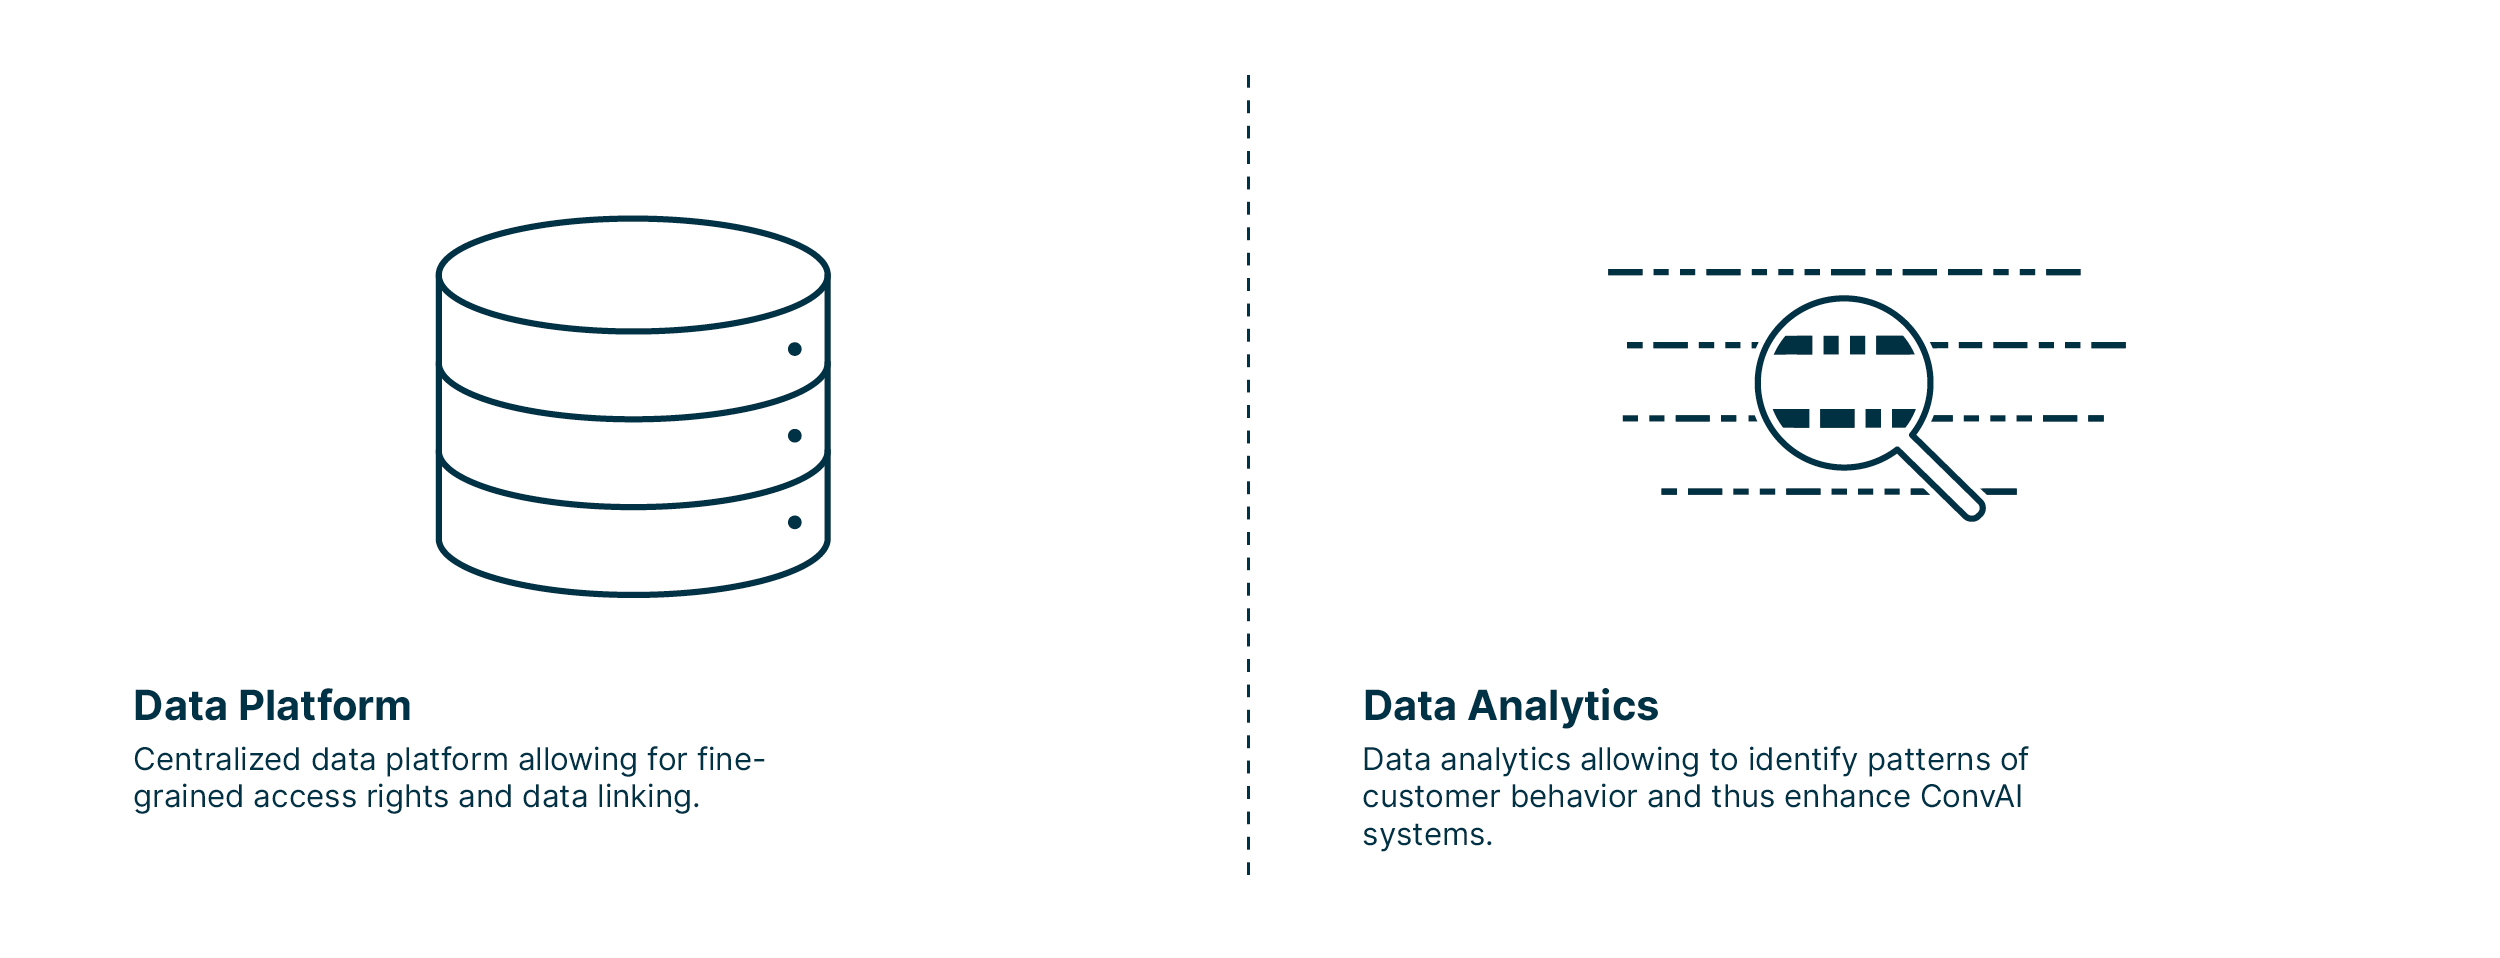 infographic_explaining_data_platform_and_data_analytics